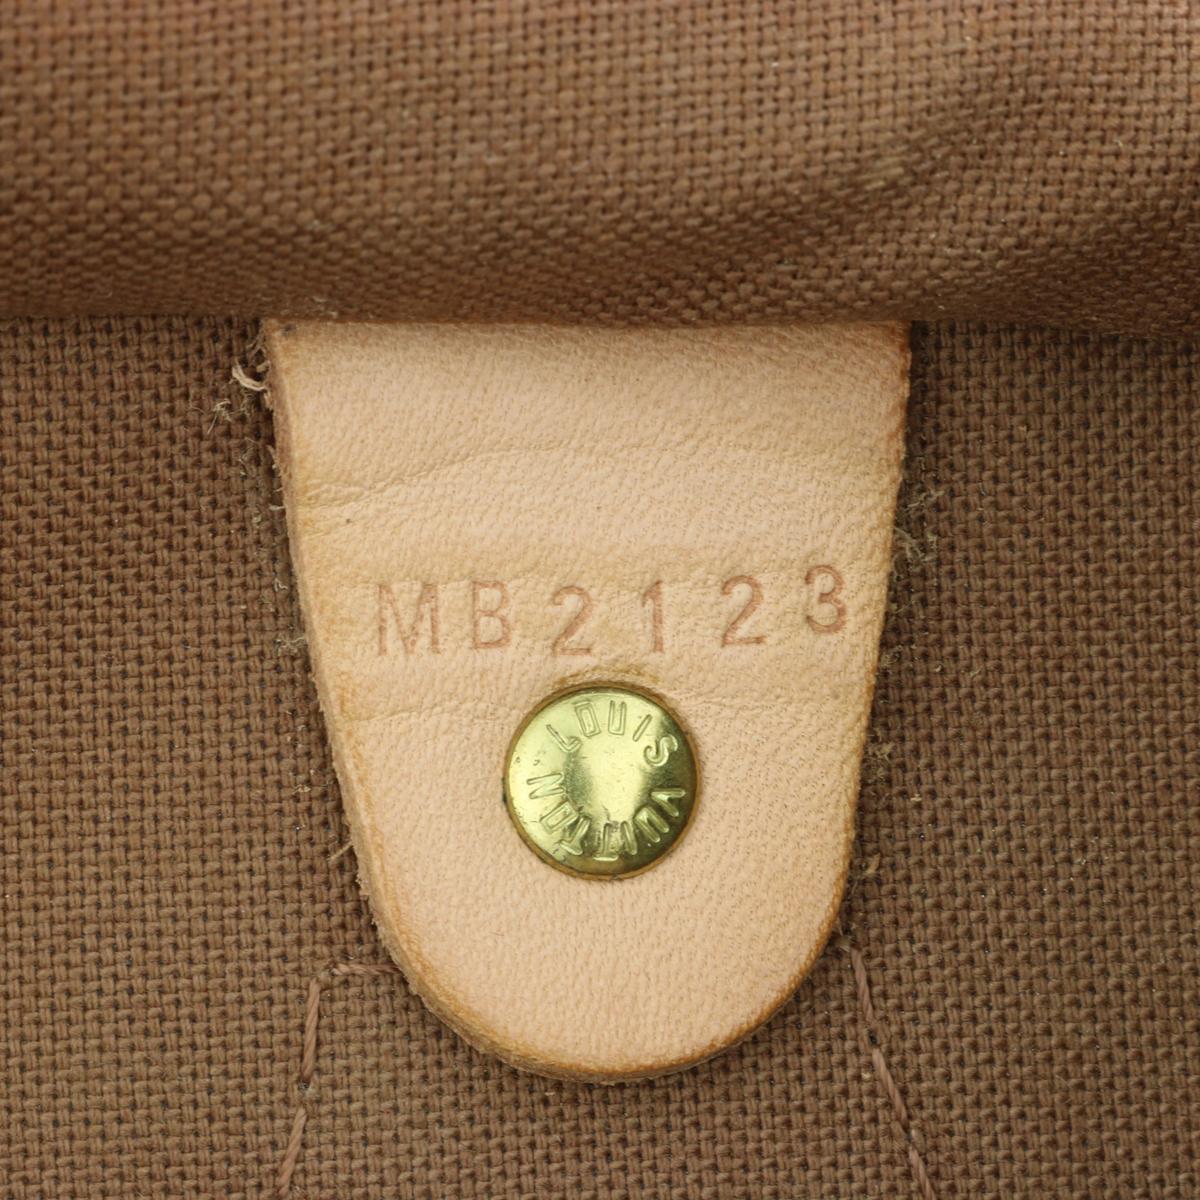 Louis Vuitton Speedy Bandoulière 30 Bag in Monogram 2013 16